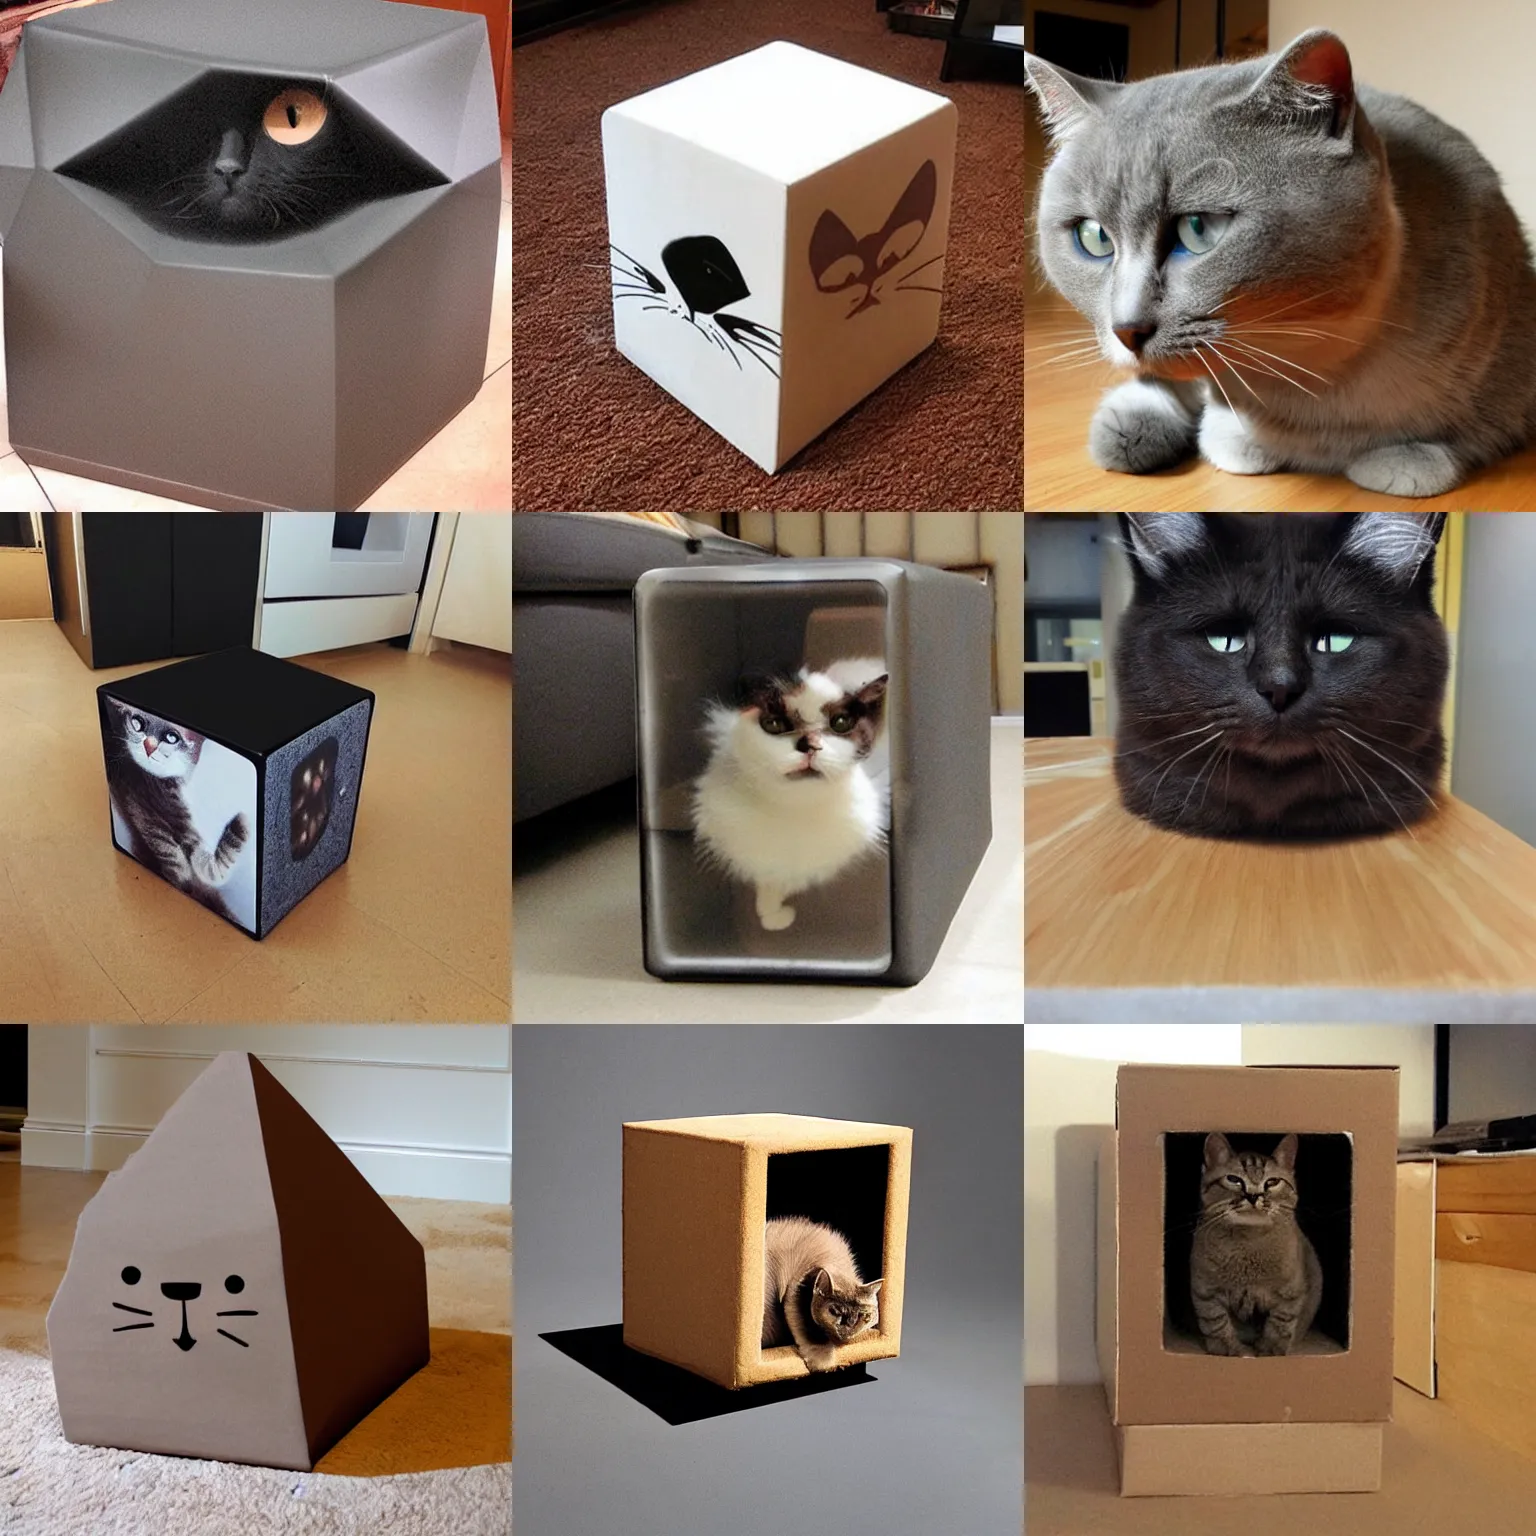 Prompt: cat shaped like a cube